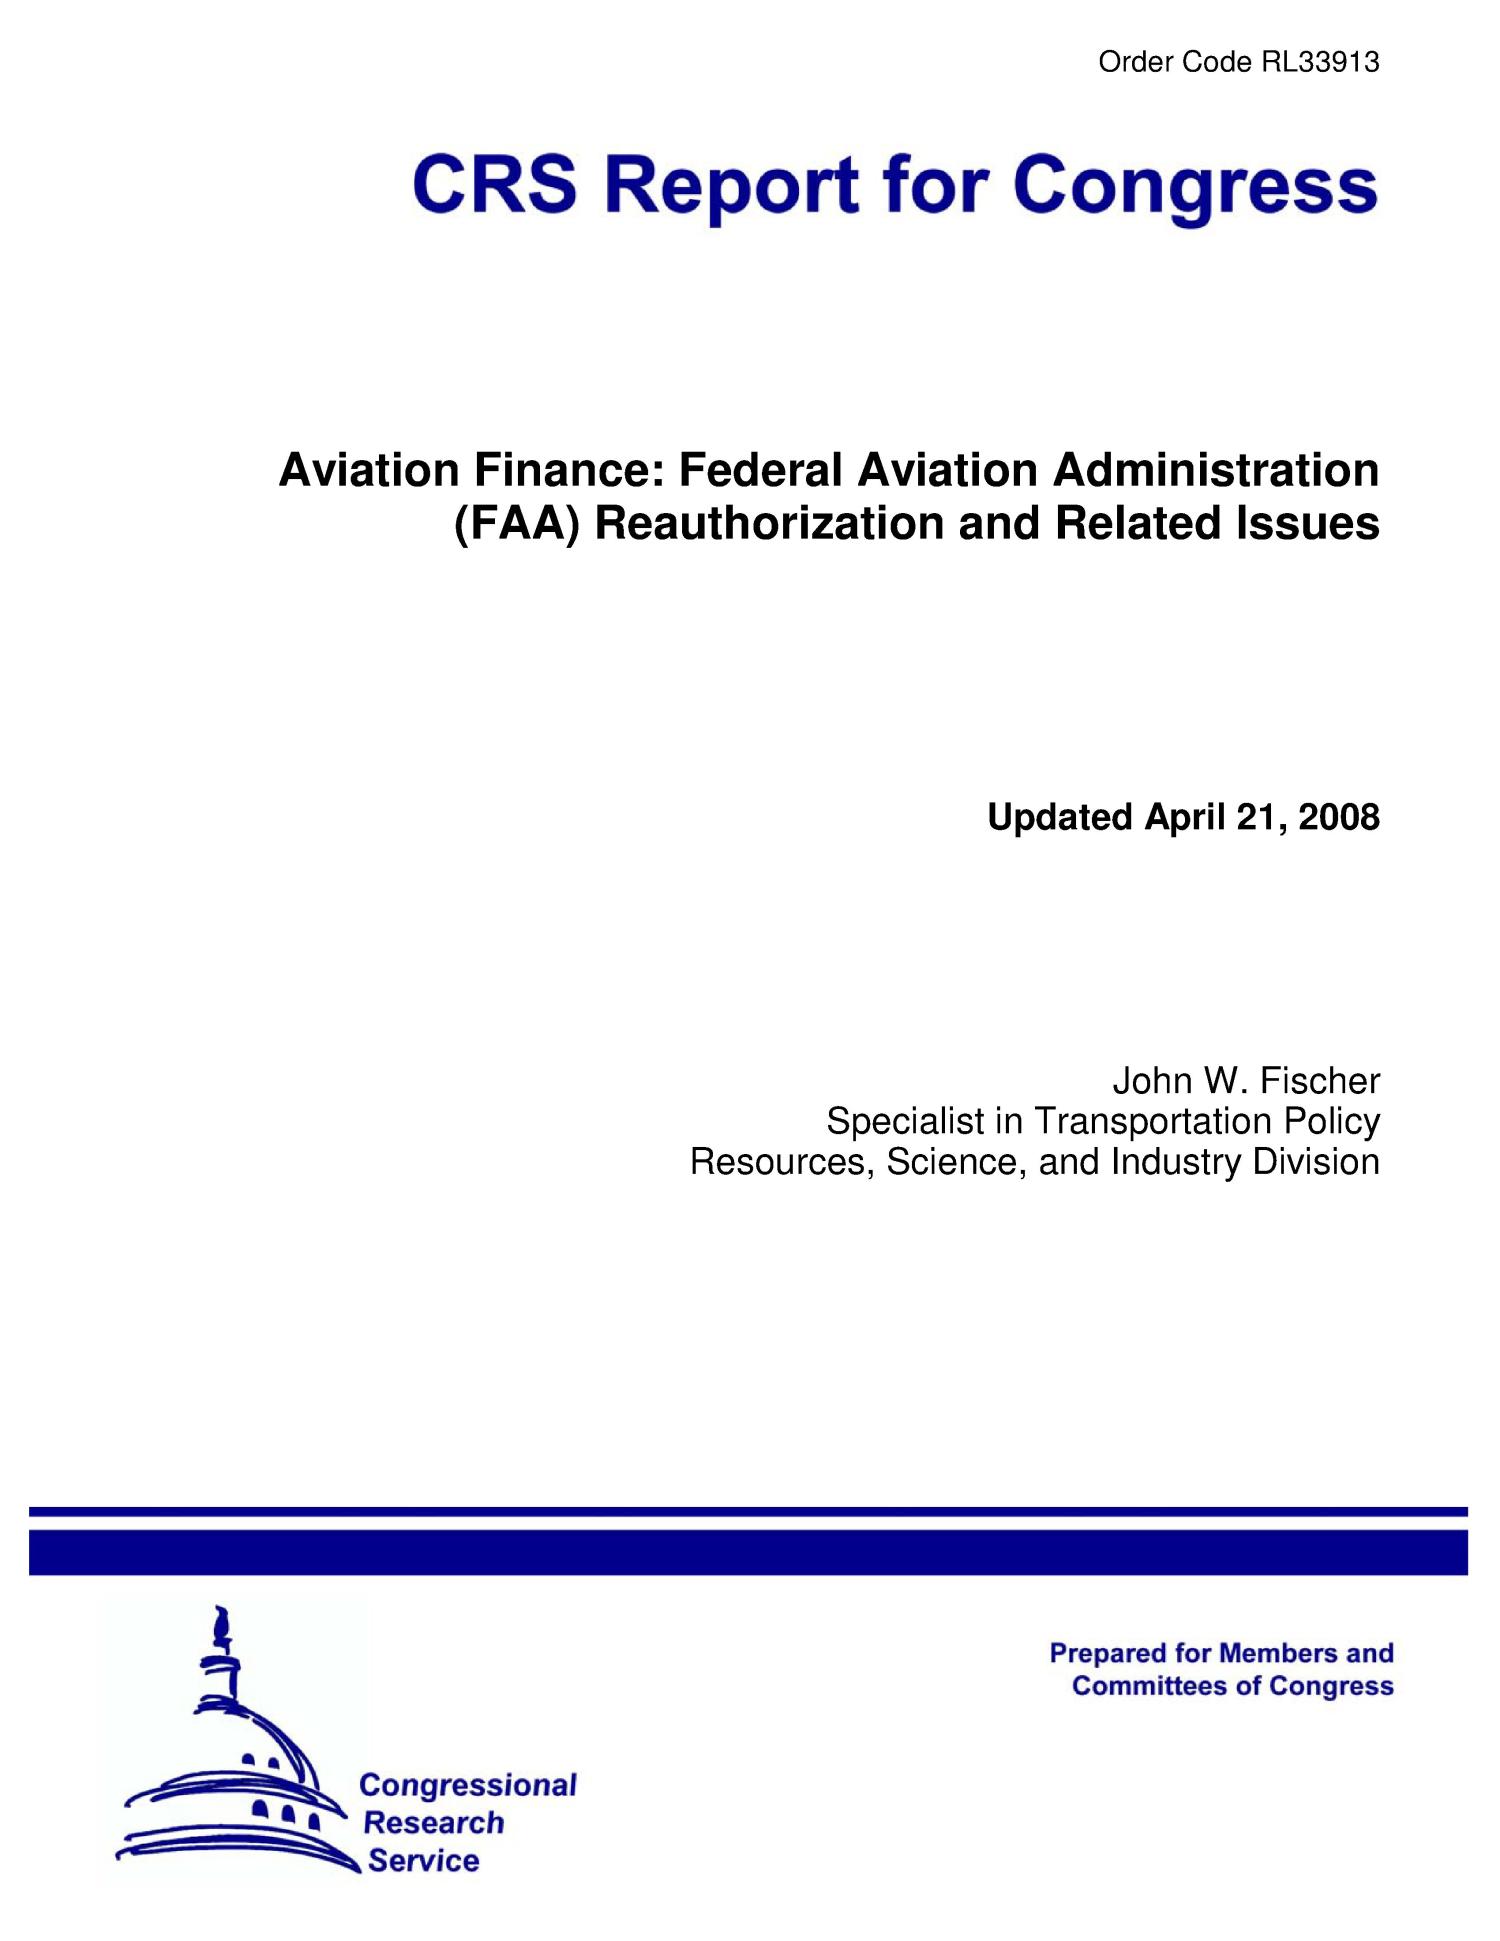 Aviation Finance Federal Aviation Administration (FAA) Reauthorization